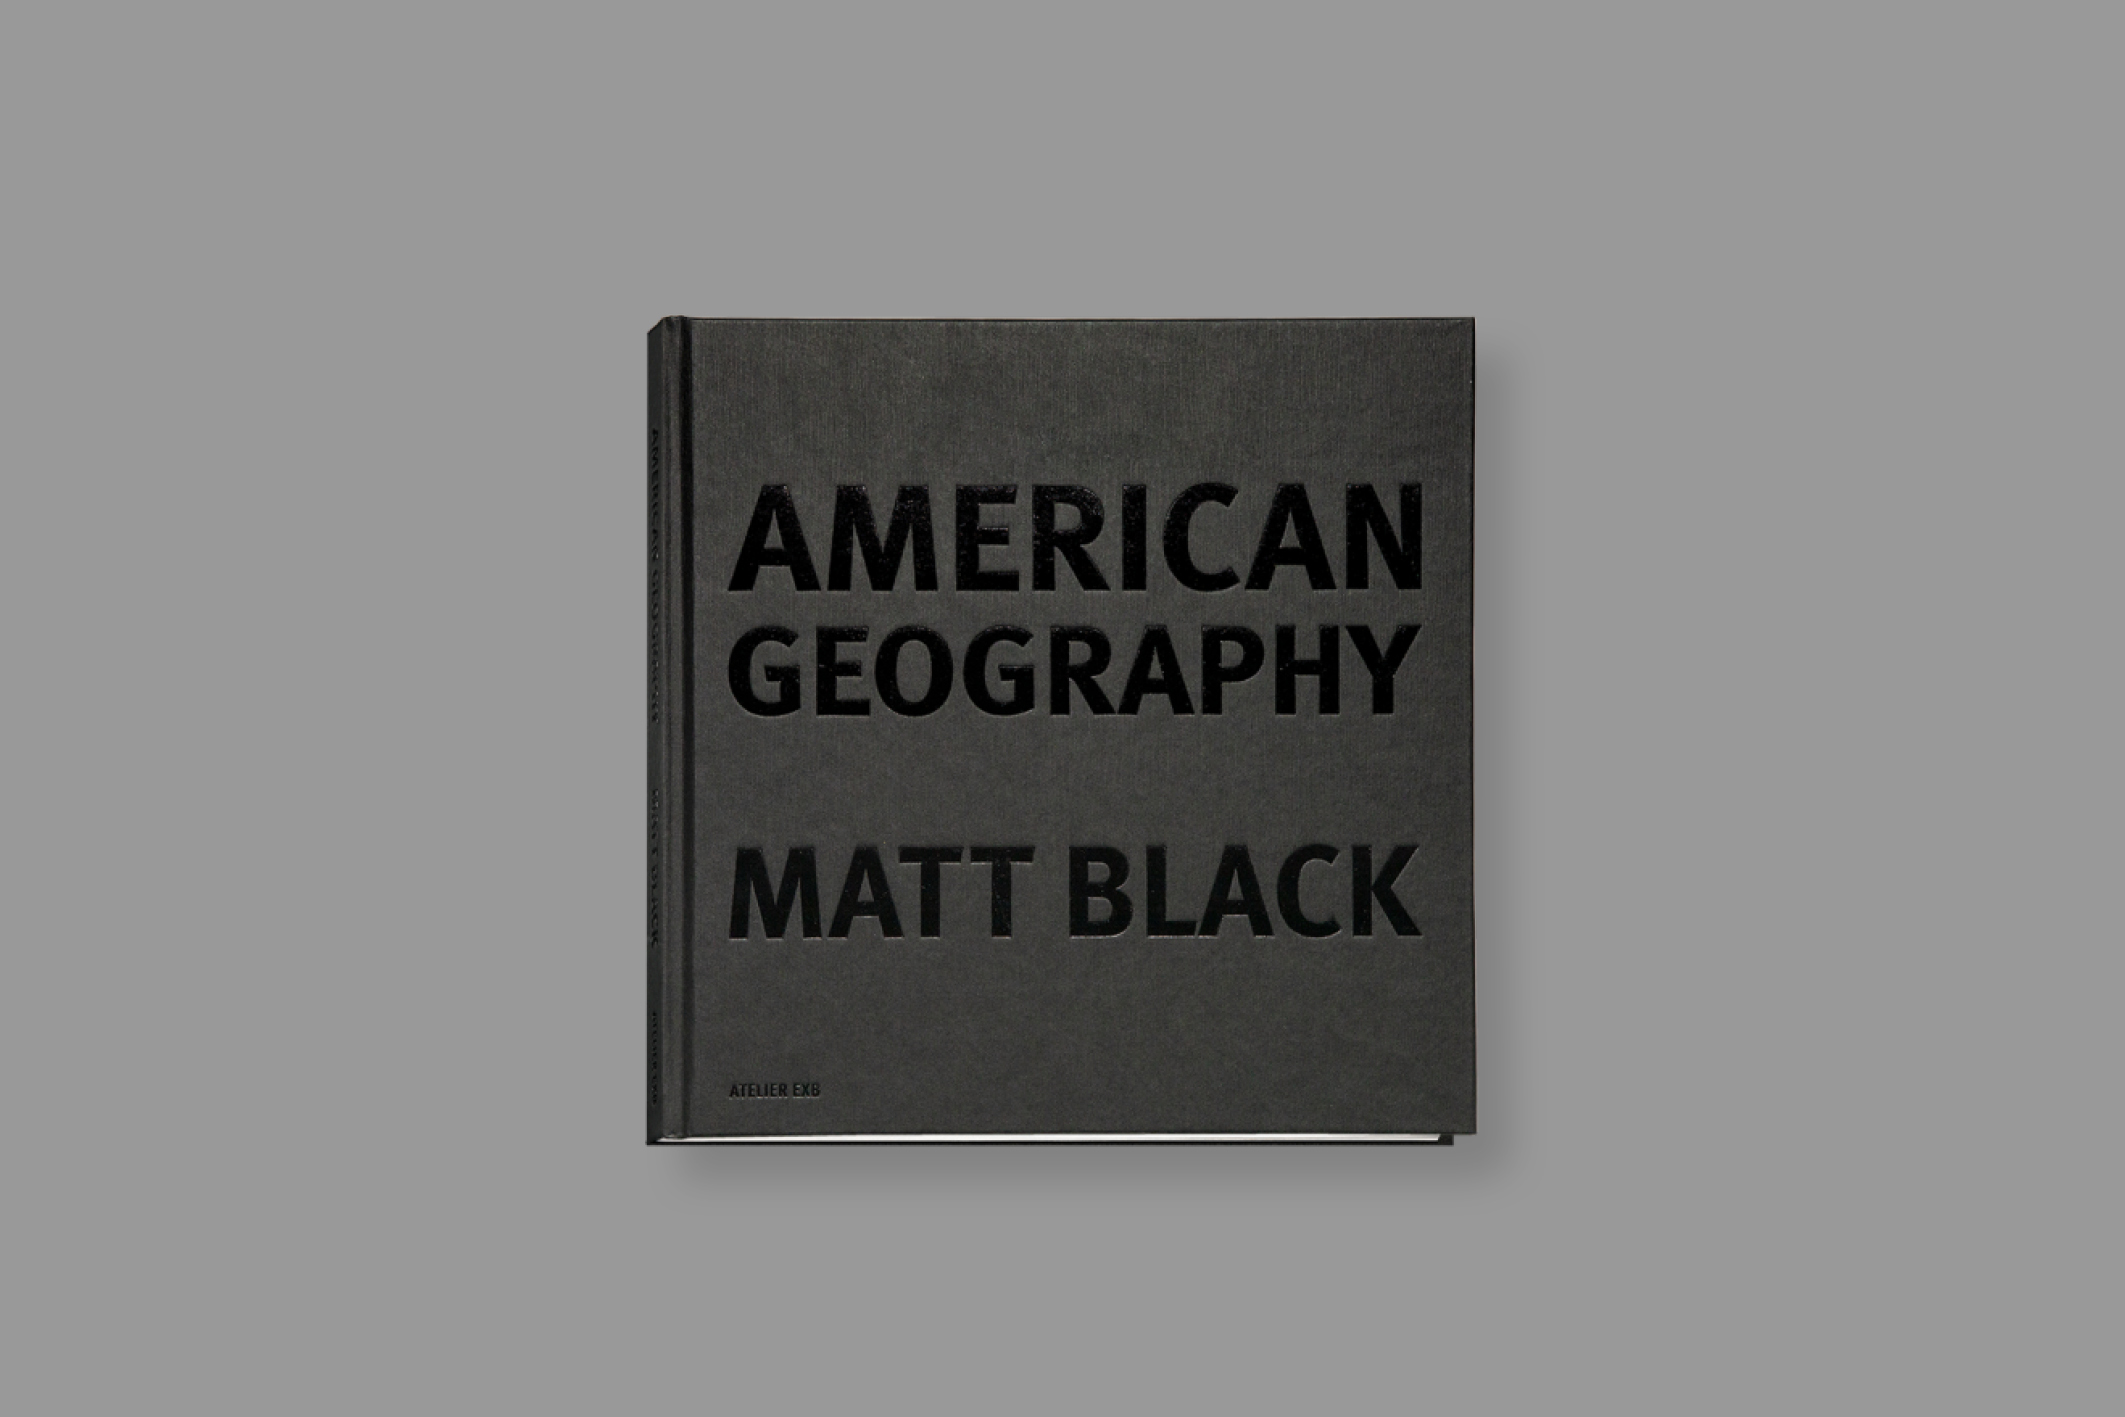 Matt-Black-american-geography-exb-cover